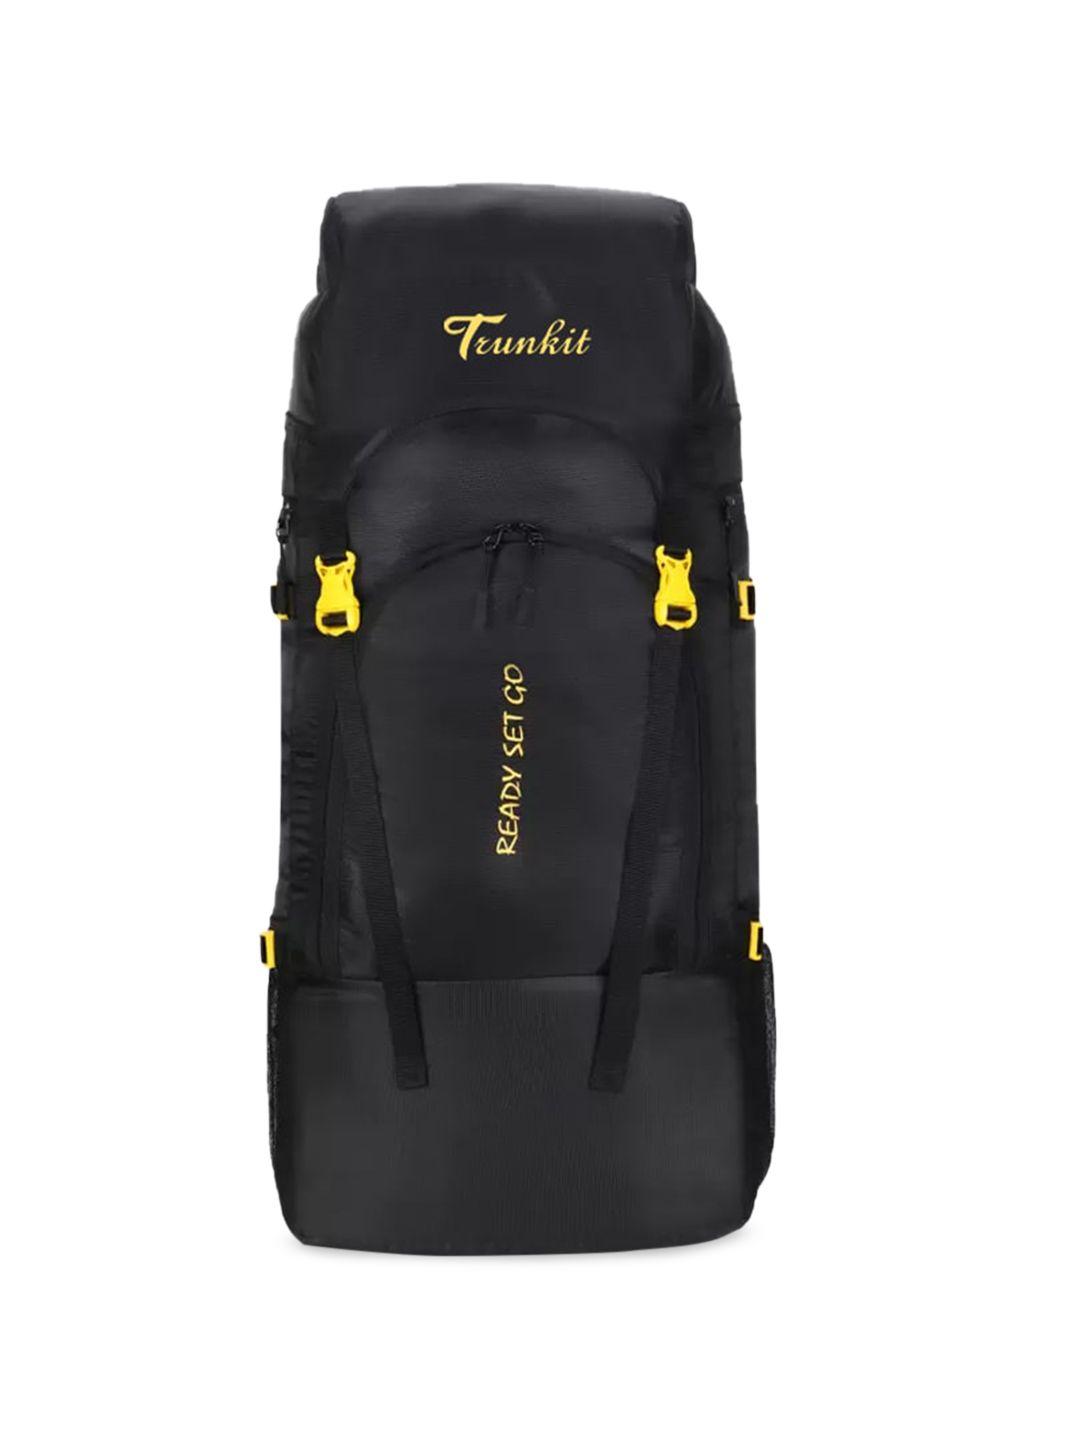 trunkit waterproof hiking rucksack